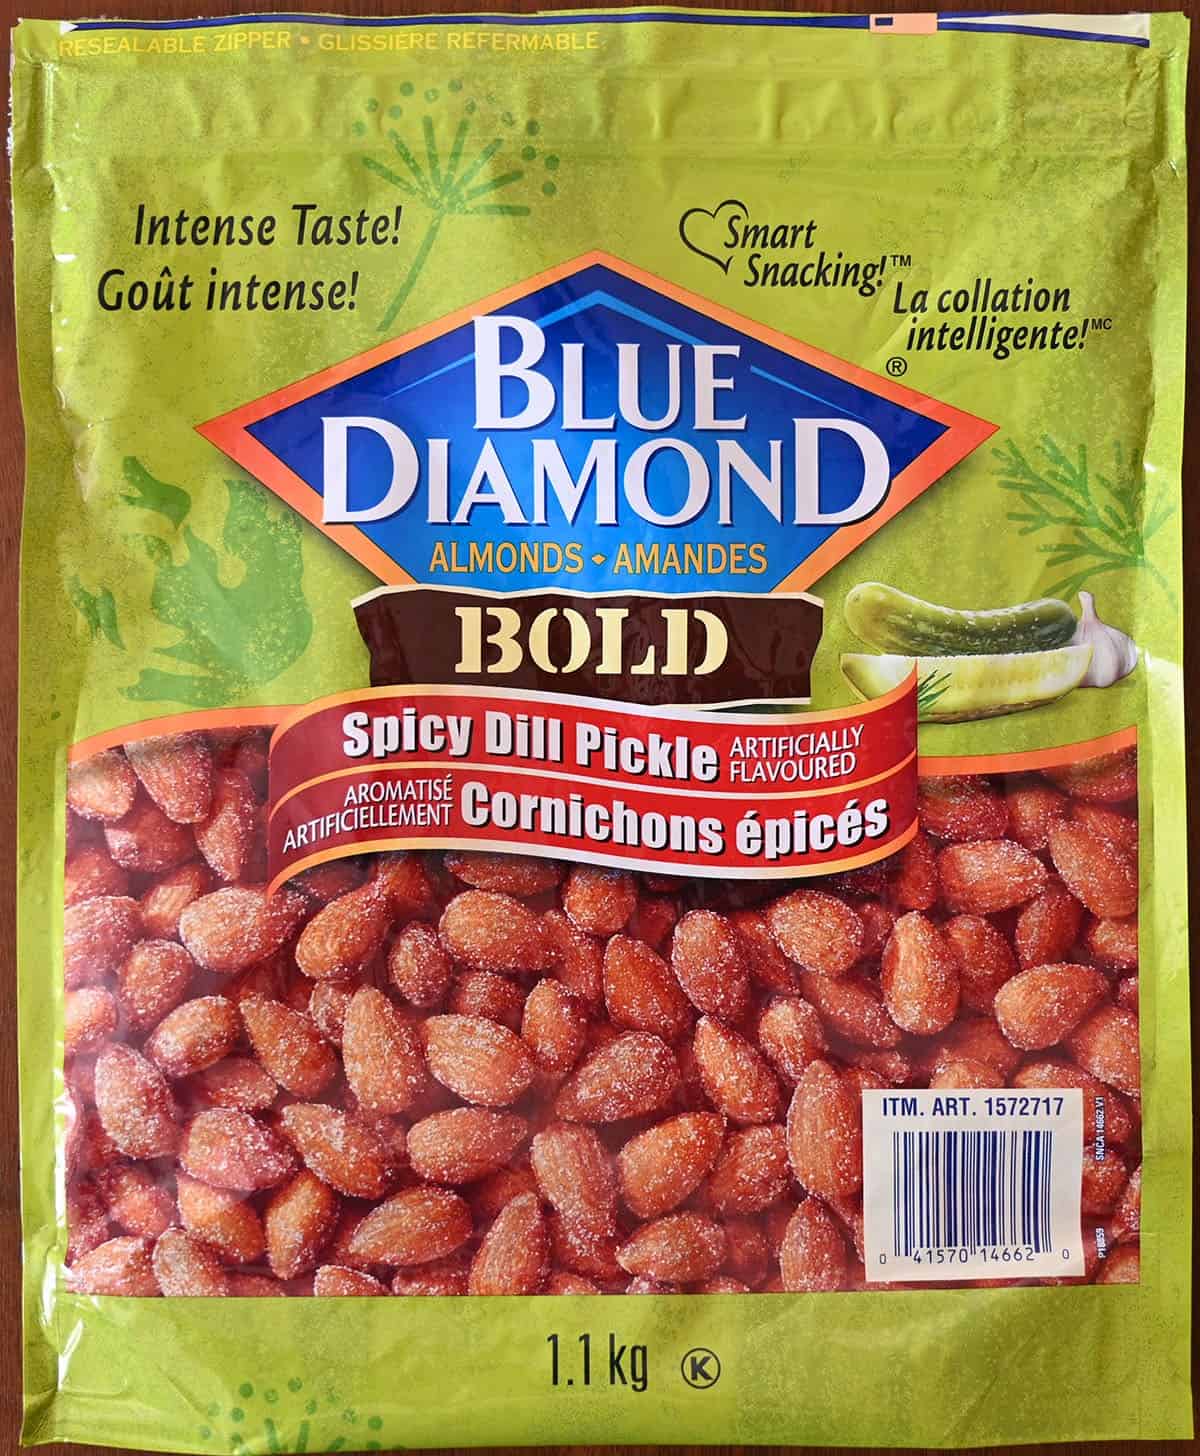 Costco Blue Diamond Spicy Dill Pickle Almonds bag, closeup image. 